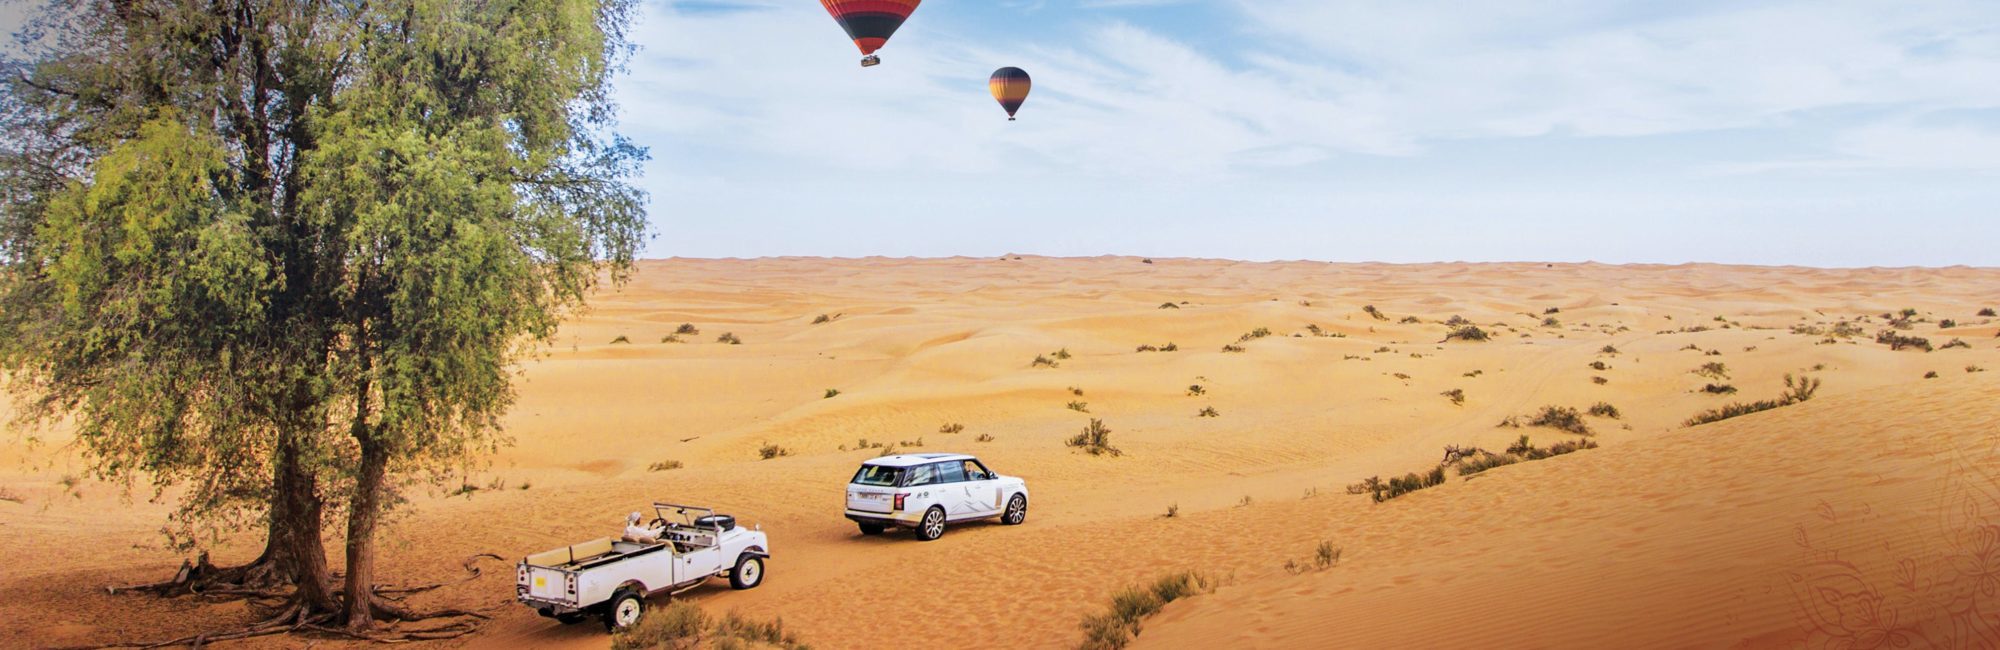 How to Choose Dubai Desert Safari